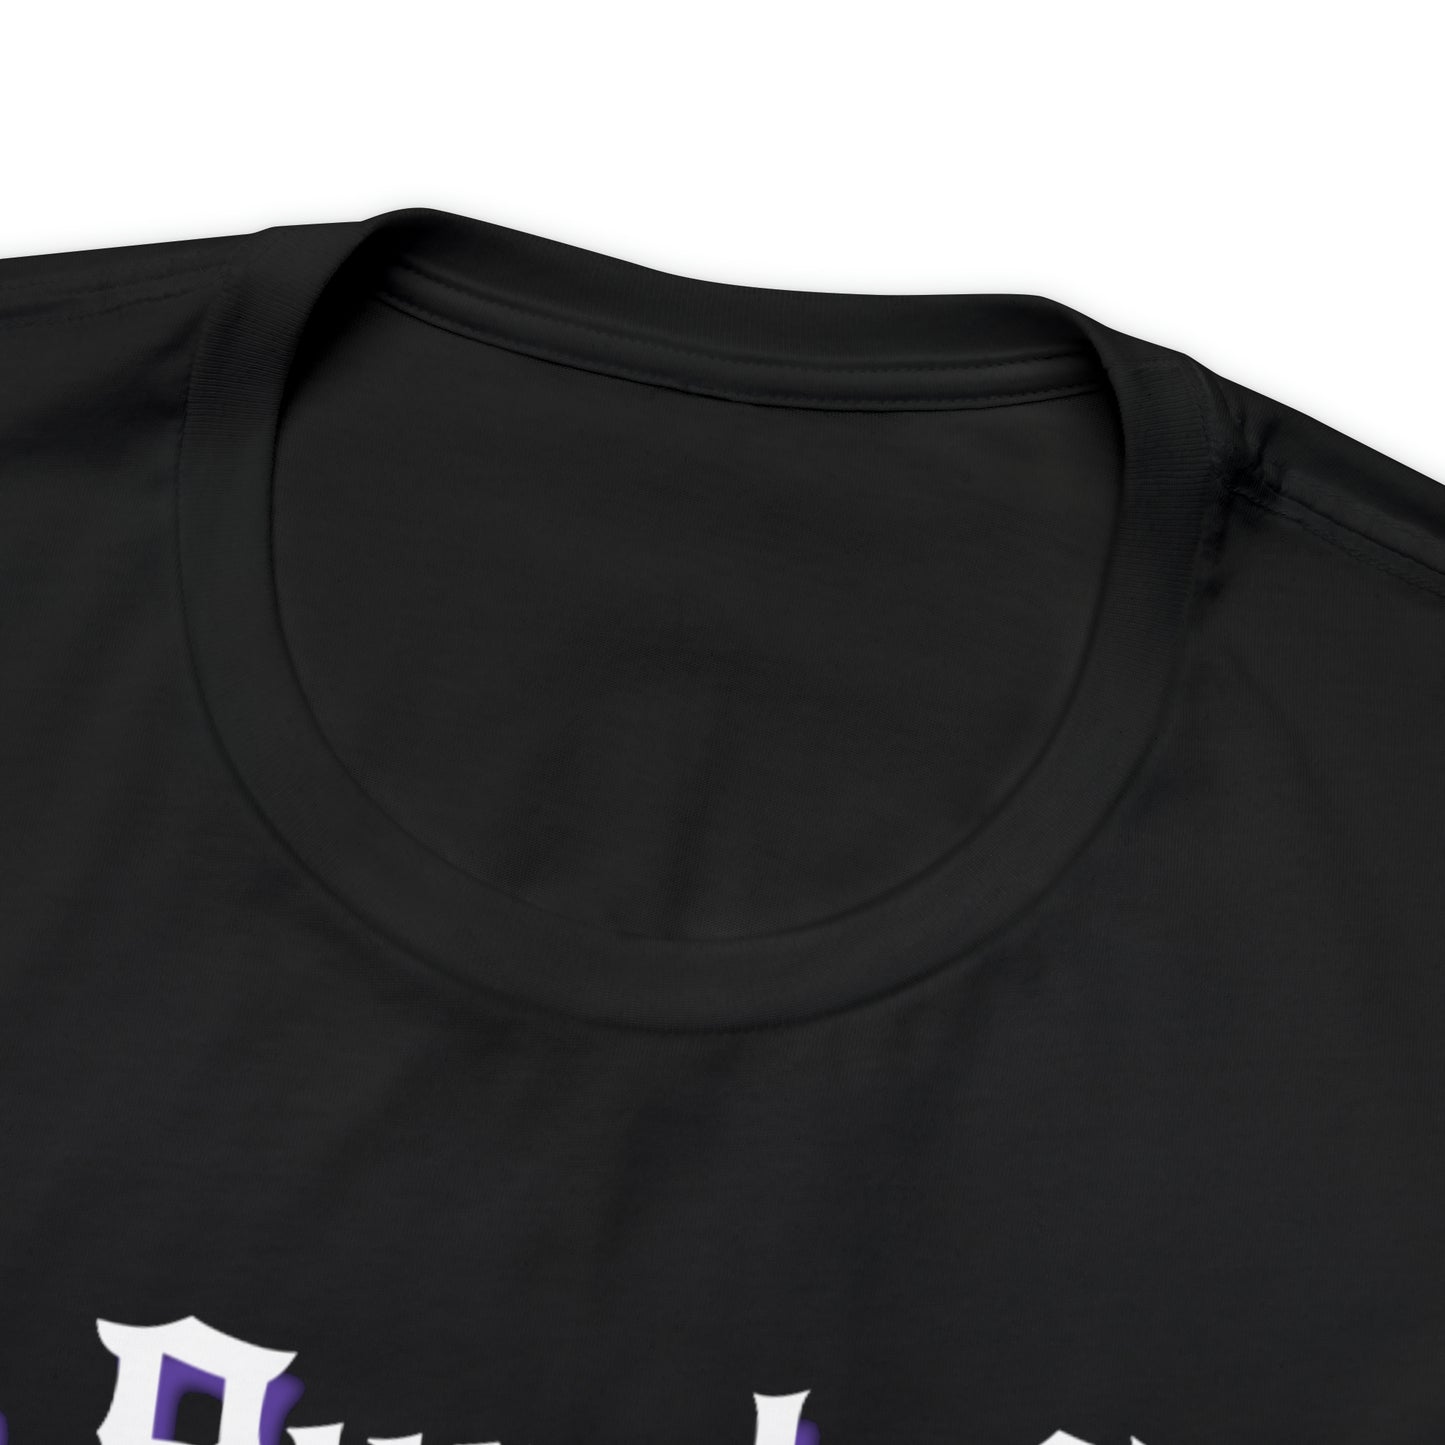 the purple Fang unisex t-shirt